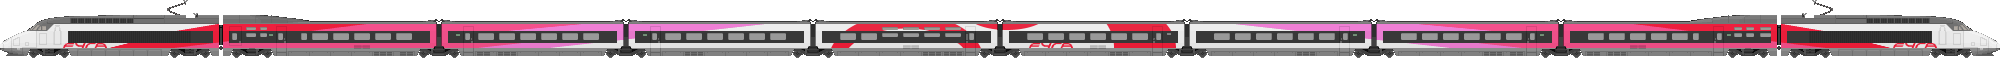 Rame TGV Fyra